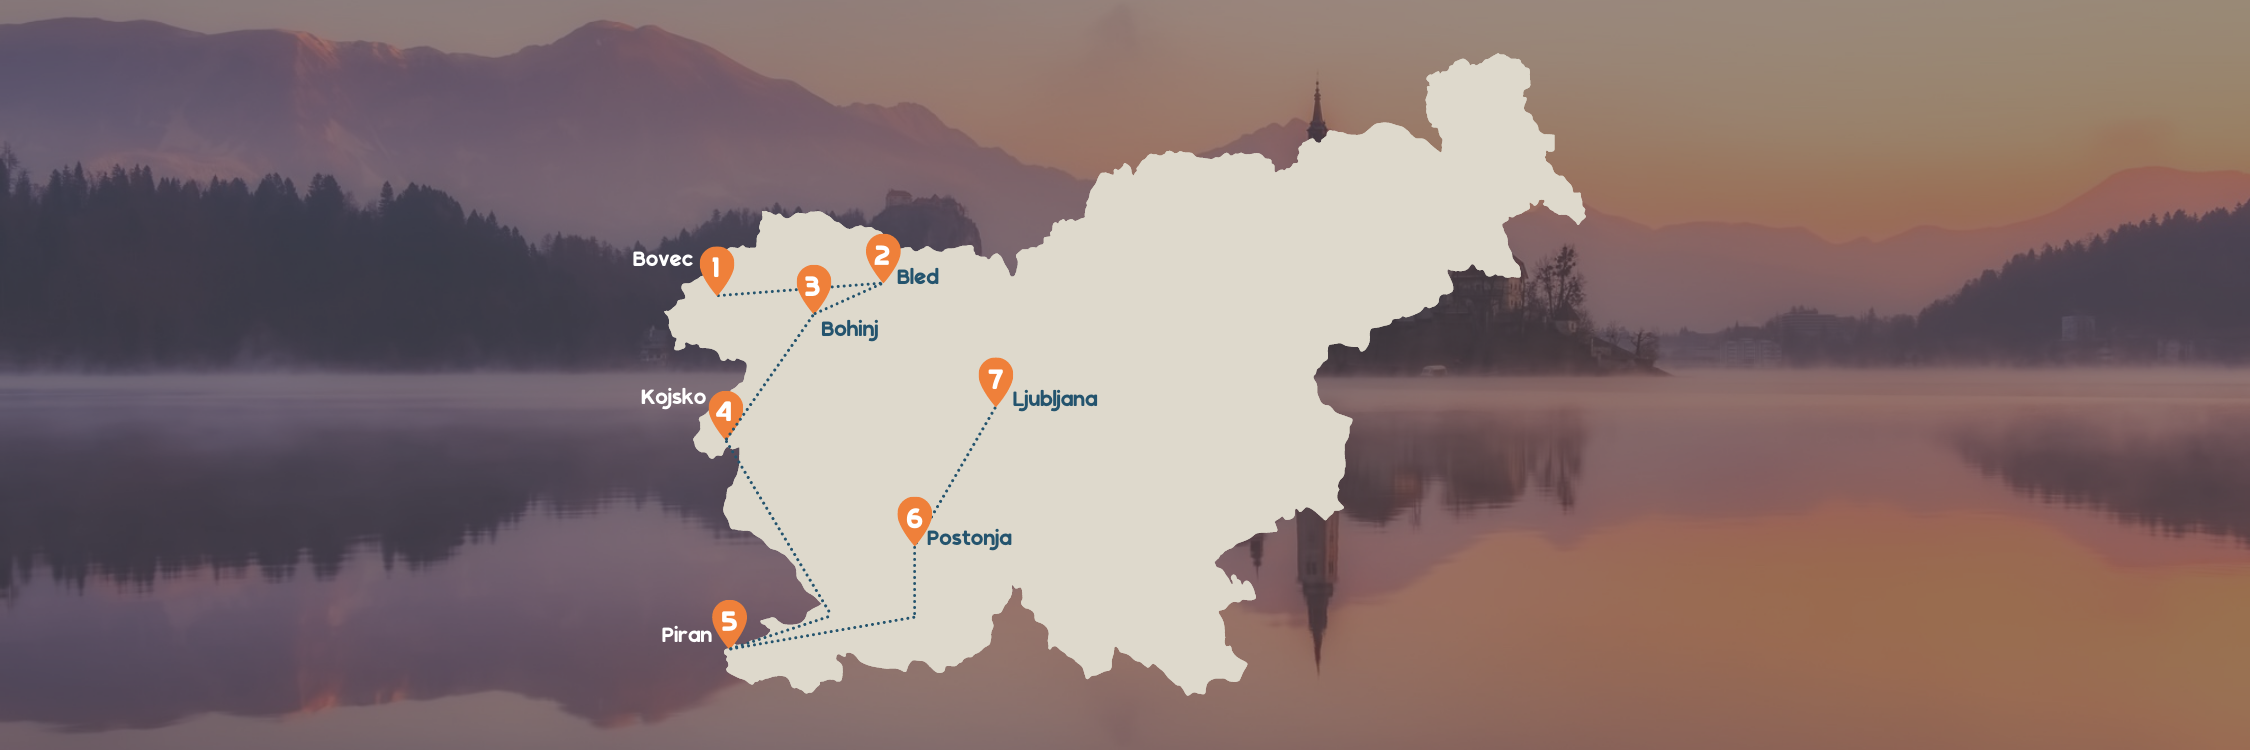 Reisroute kaartje Slovenië